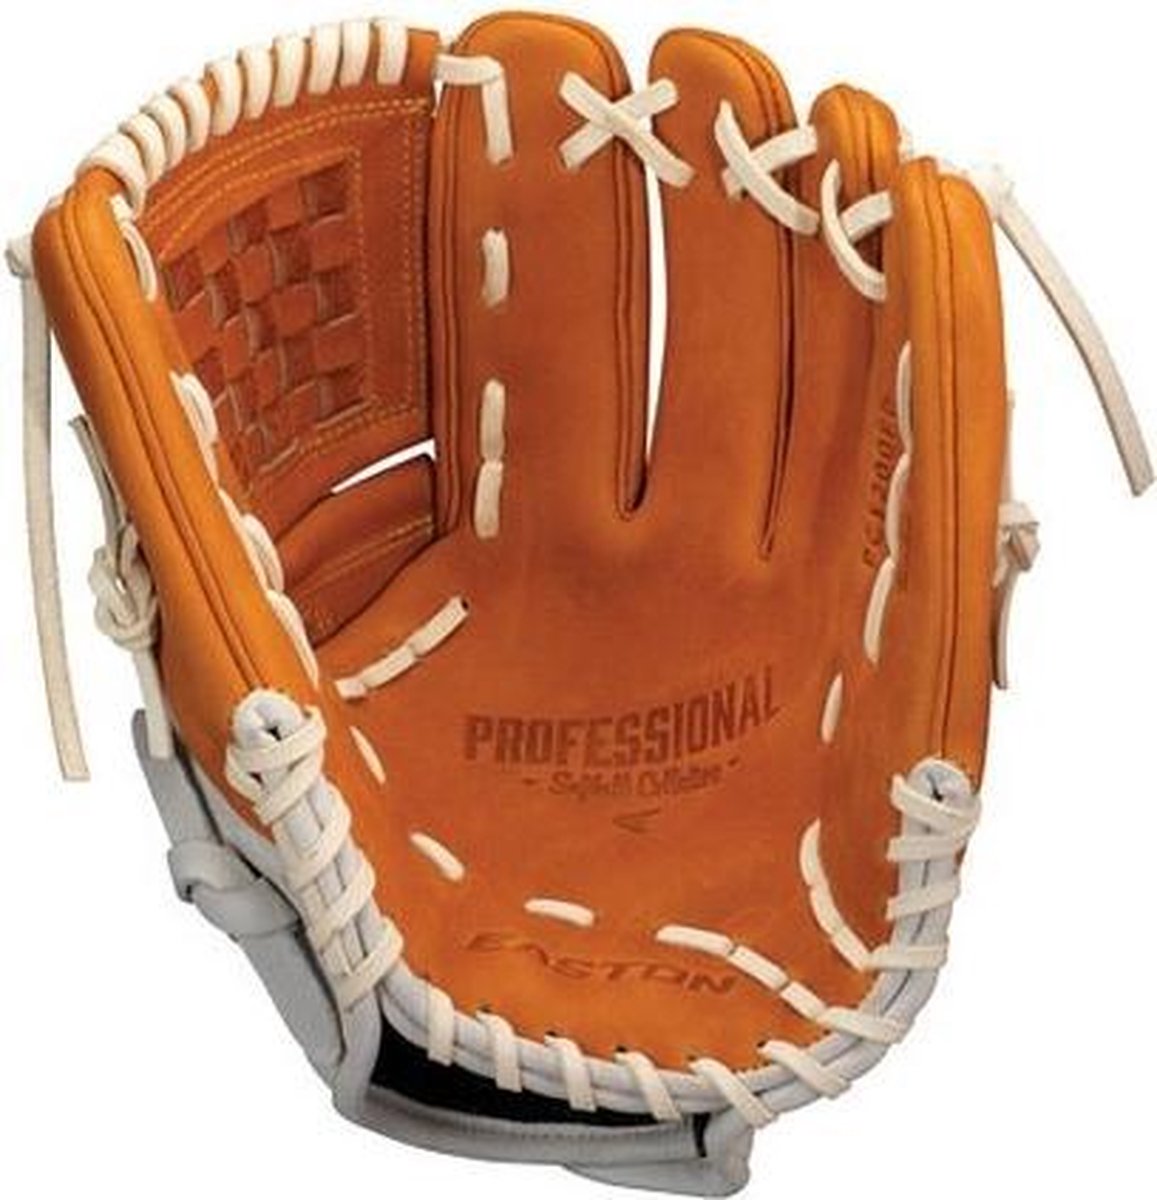 Softball-Handschuh – PC1200 Fastpitch – Braun – 12 Zoll (Braun)